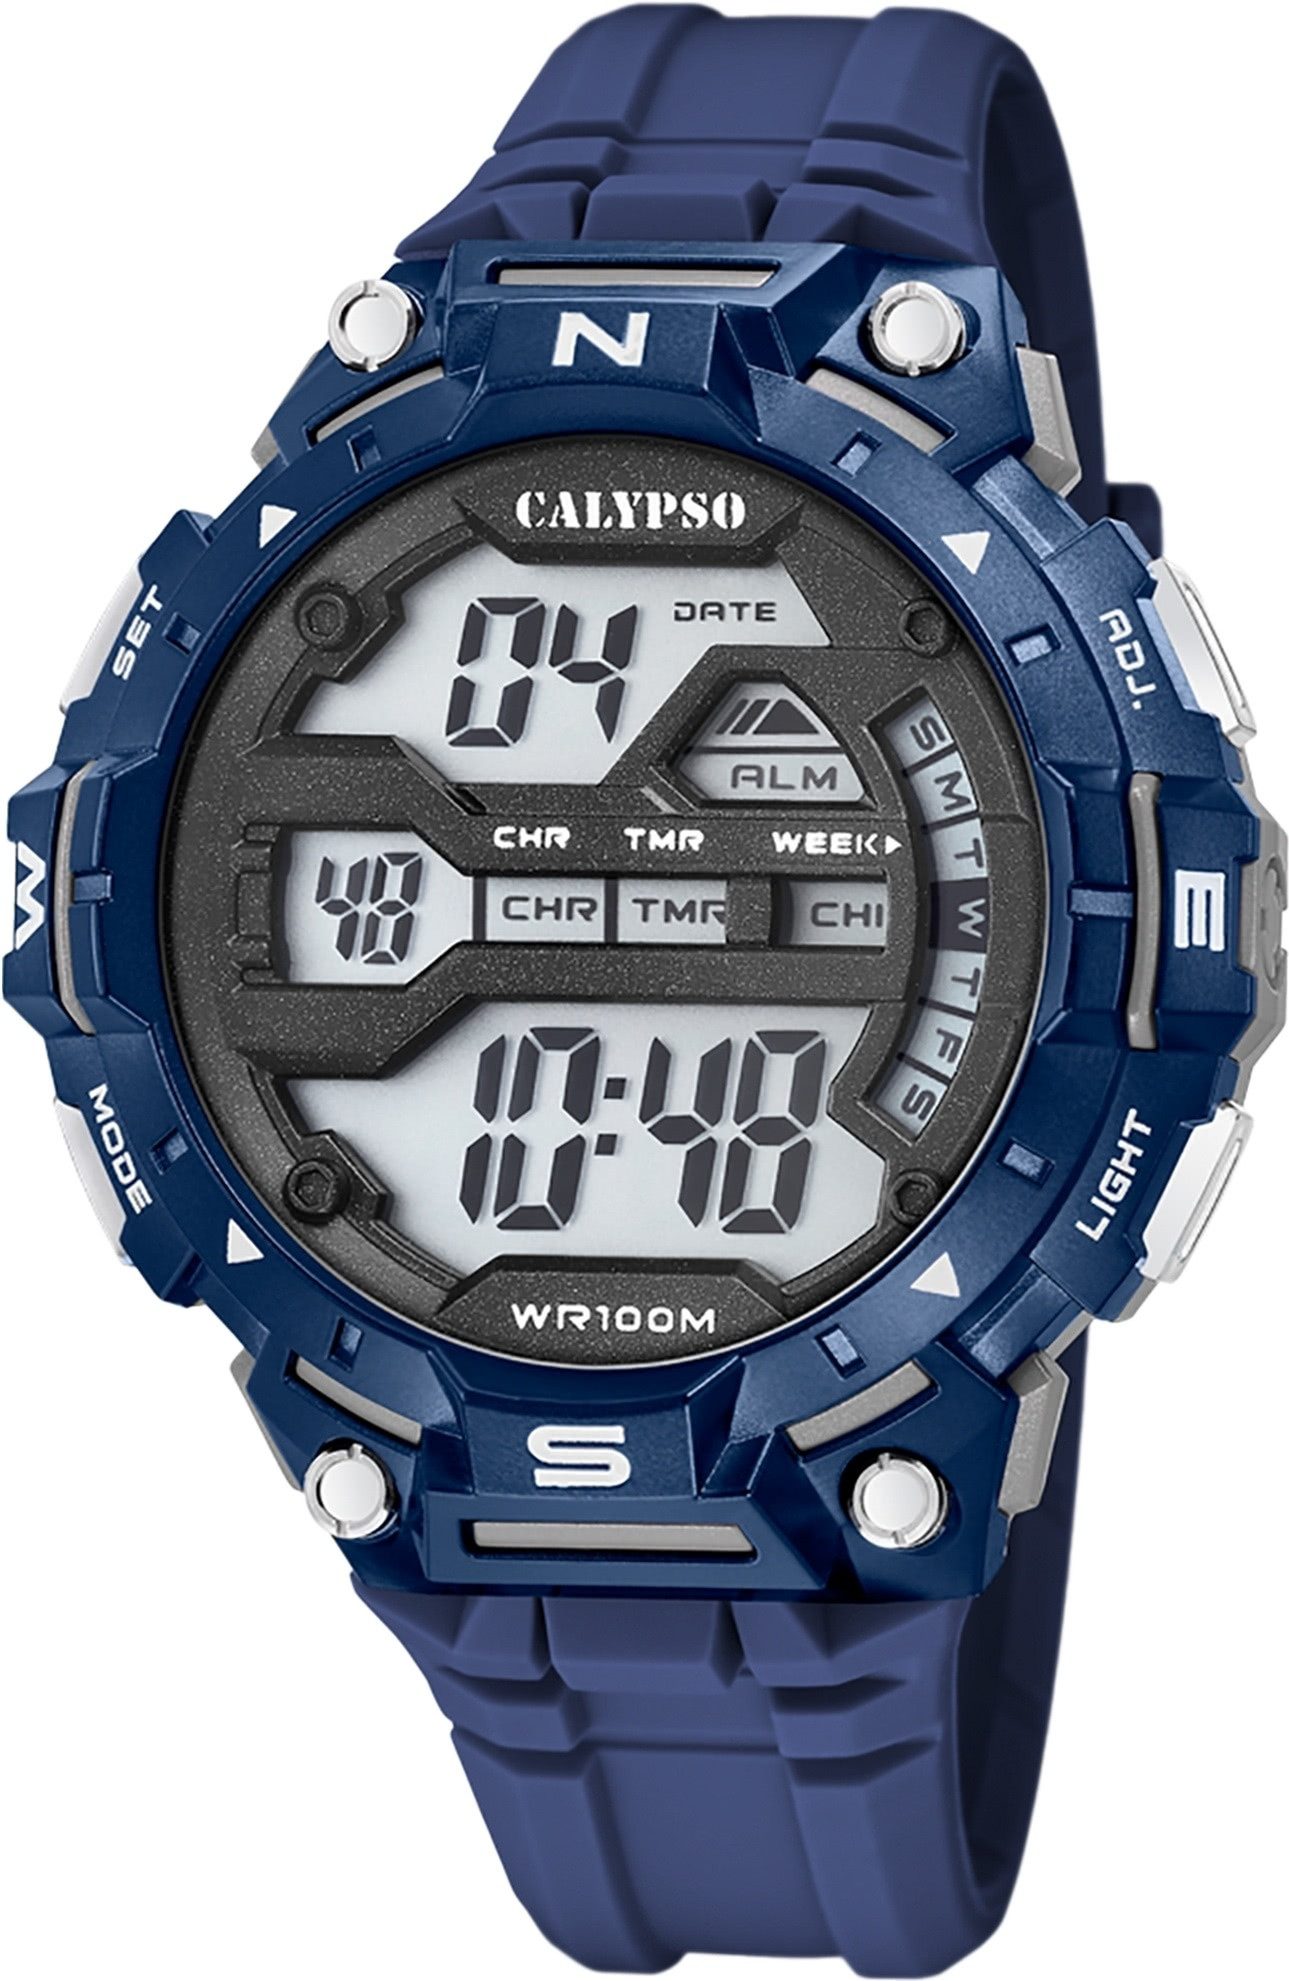 CALYPSO WATCHES Digitaluhr Calypso Herrenuhr Kunststoff blau Calypso, (Digitaluhr), Herrenuhr rund, extra groß (ca. 51mm) Kunststoffarmband, Sport-Style